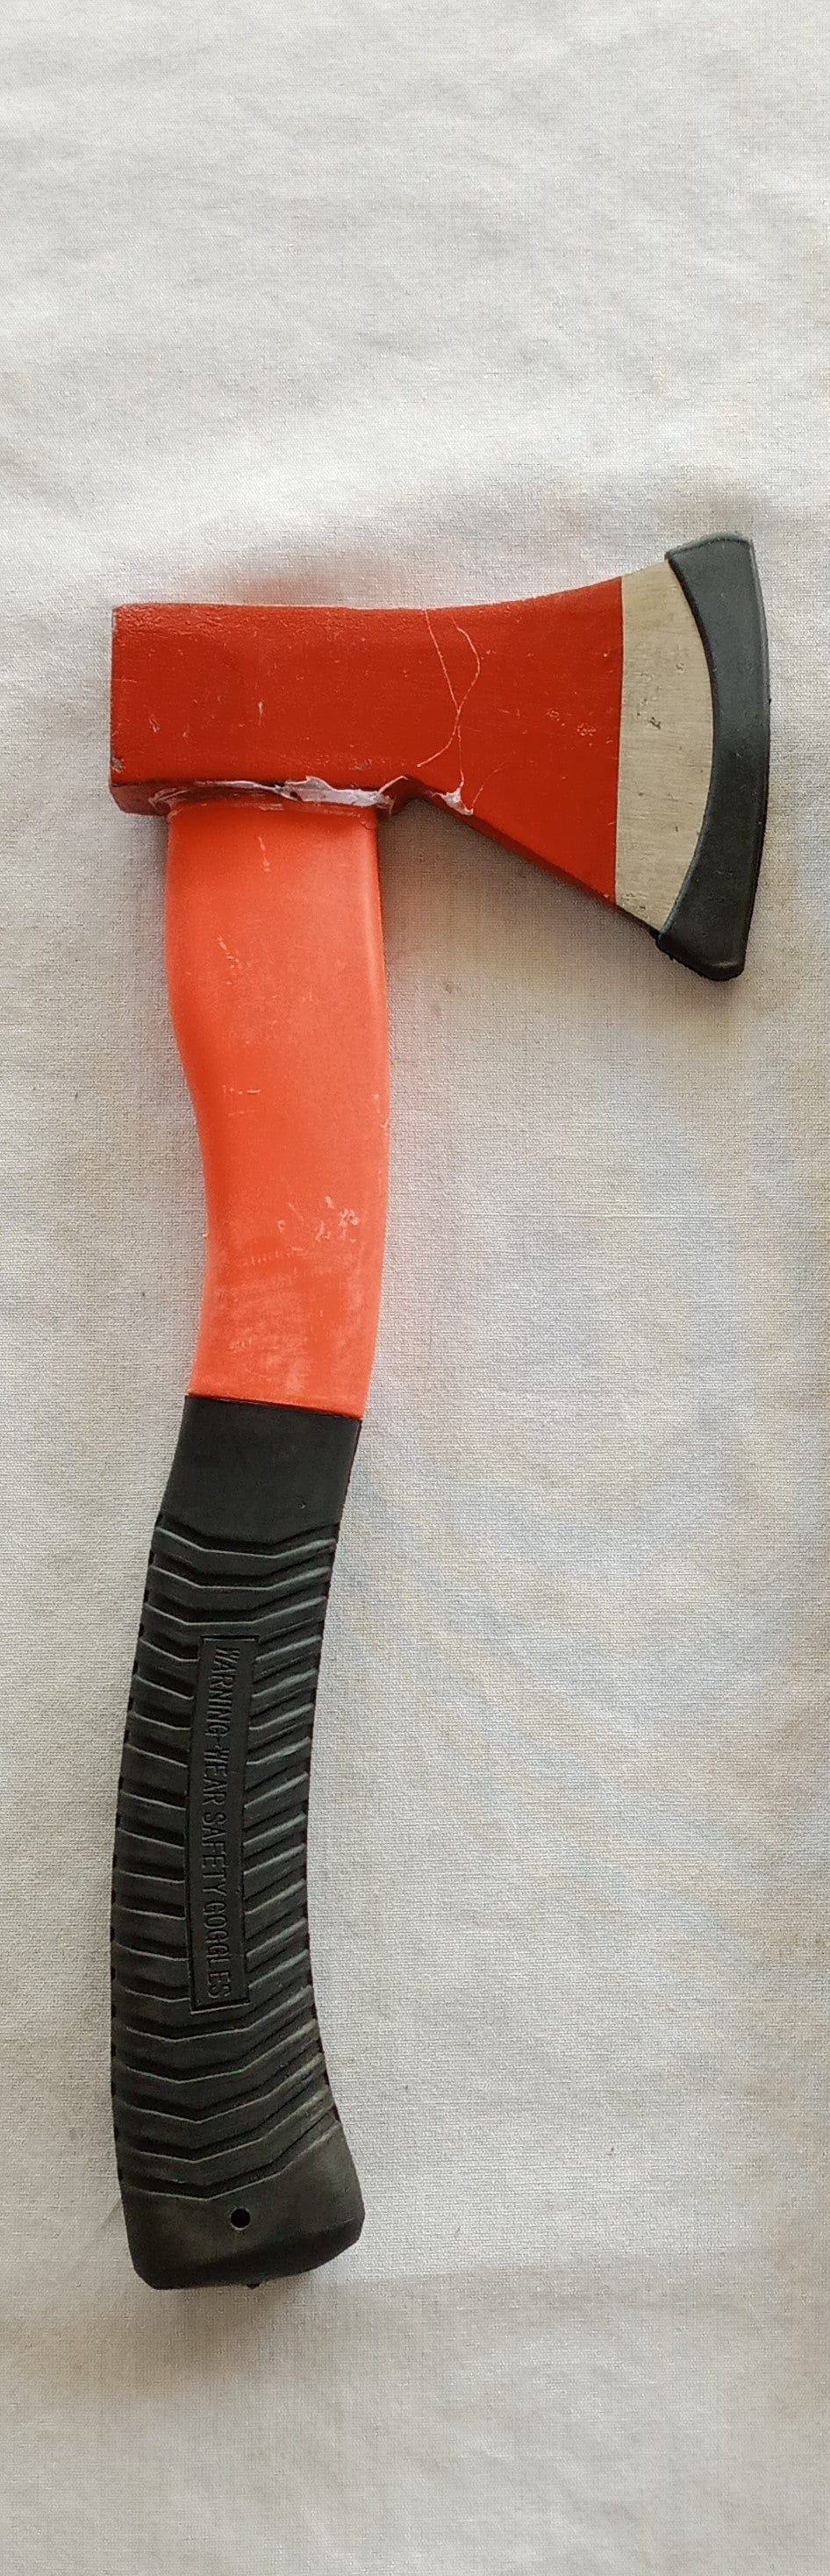 Hatchet Axe Agro-toolz Red